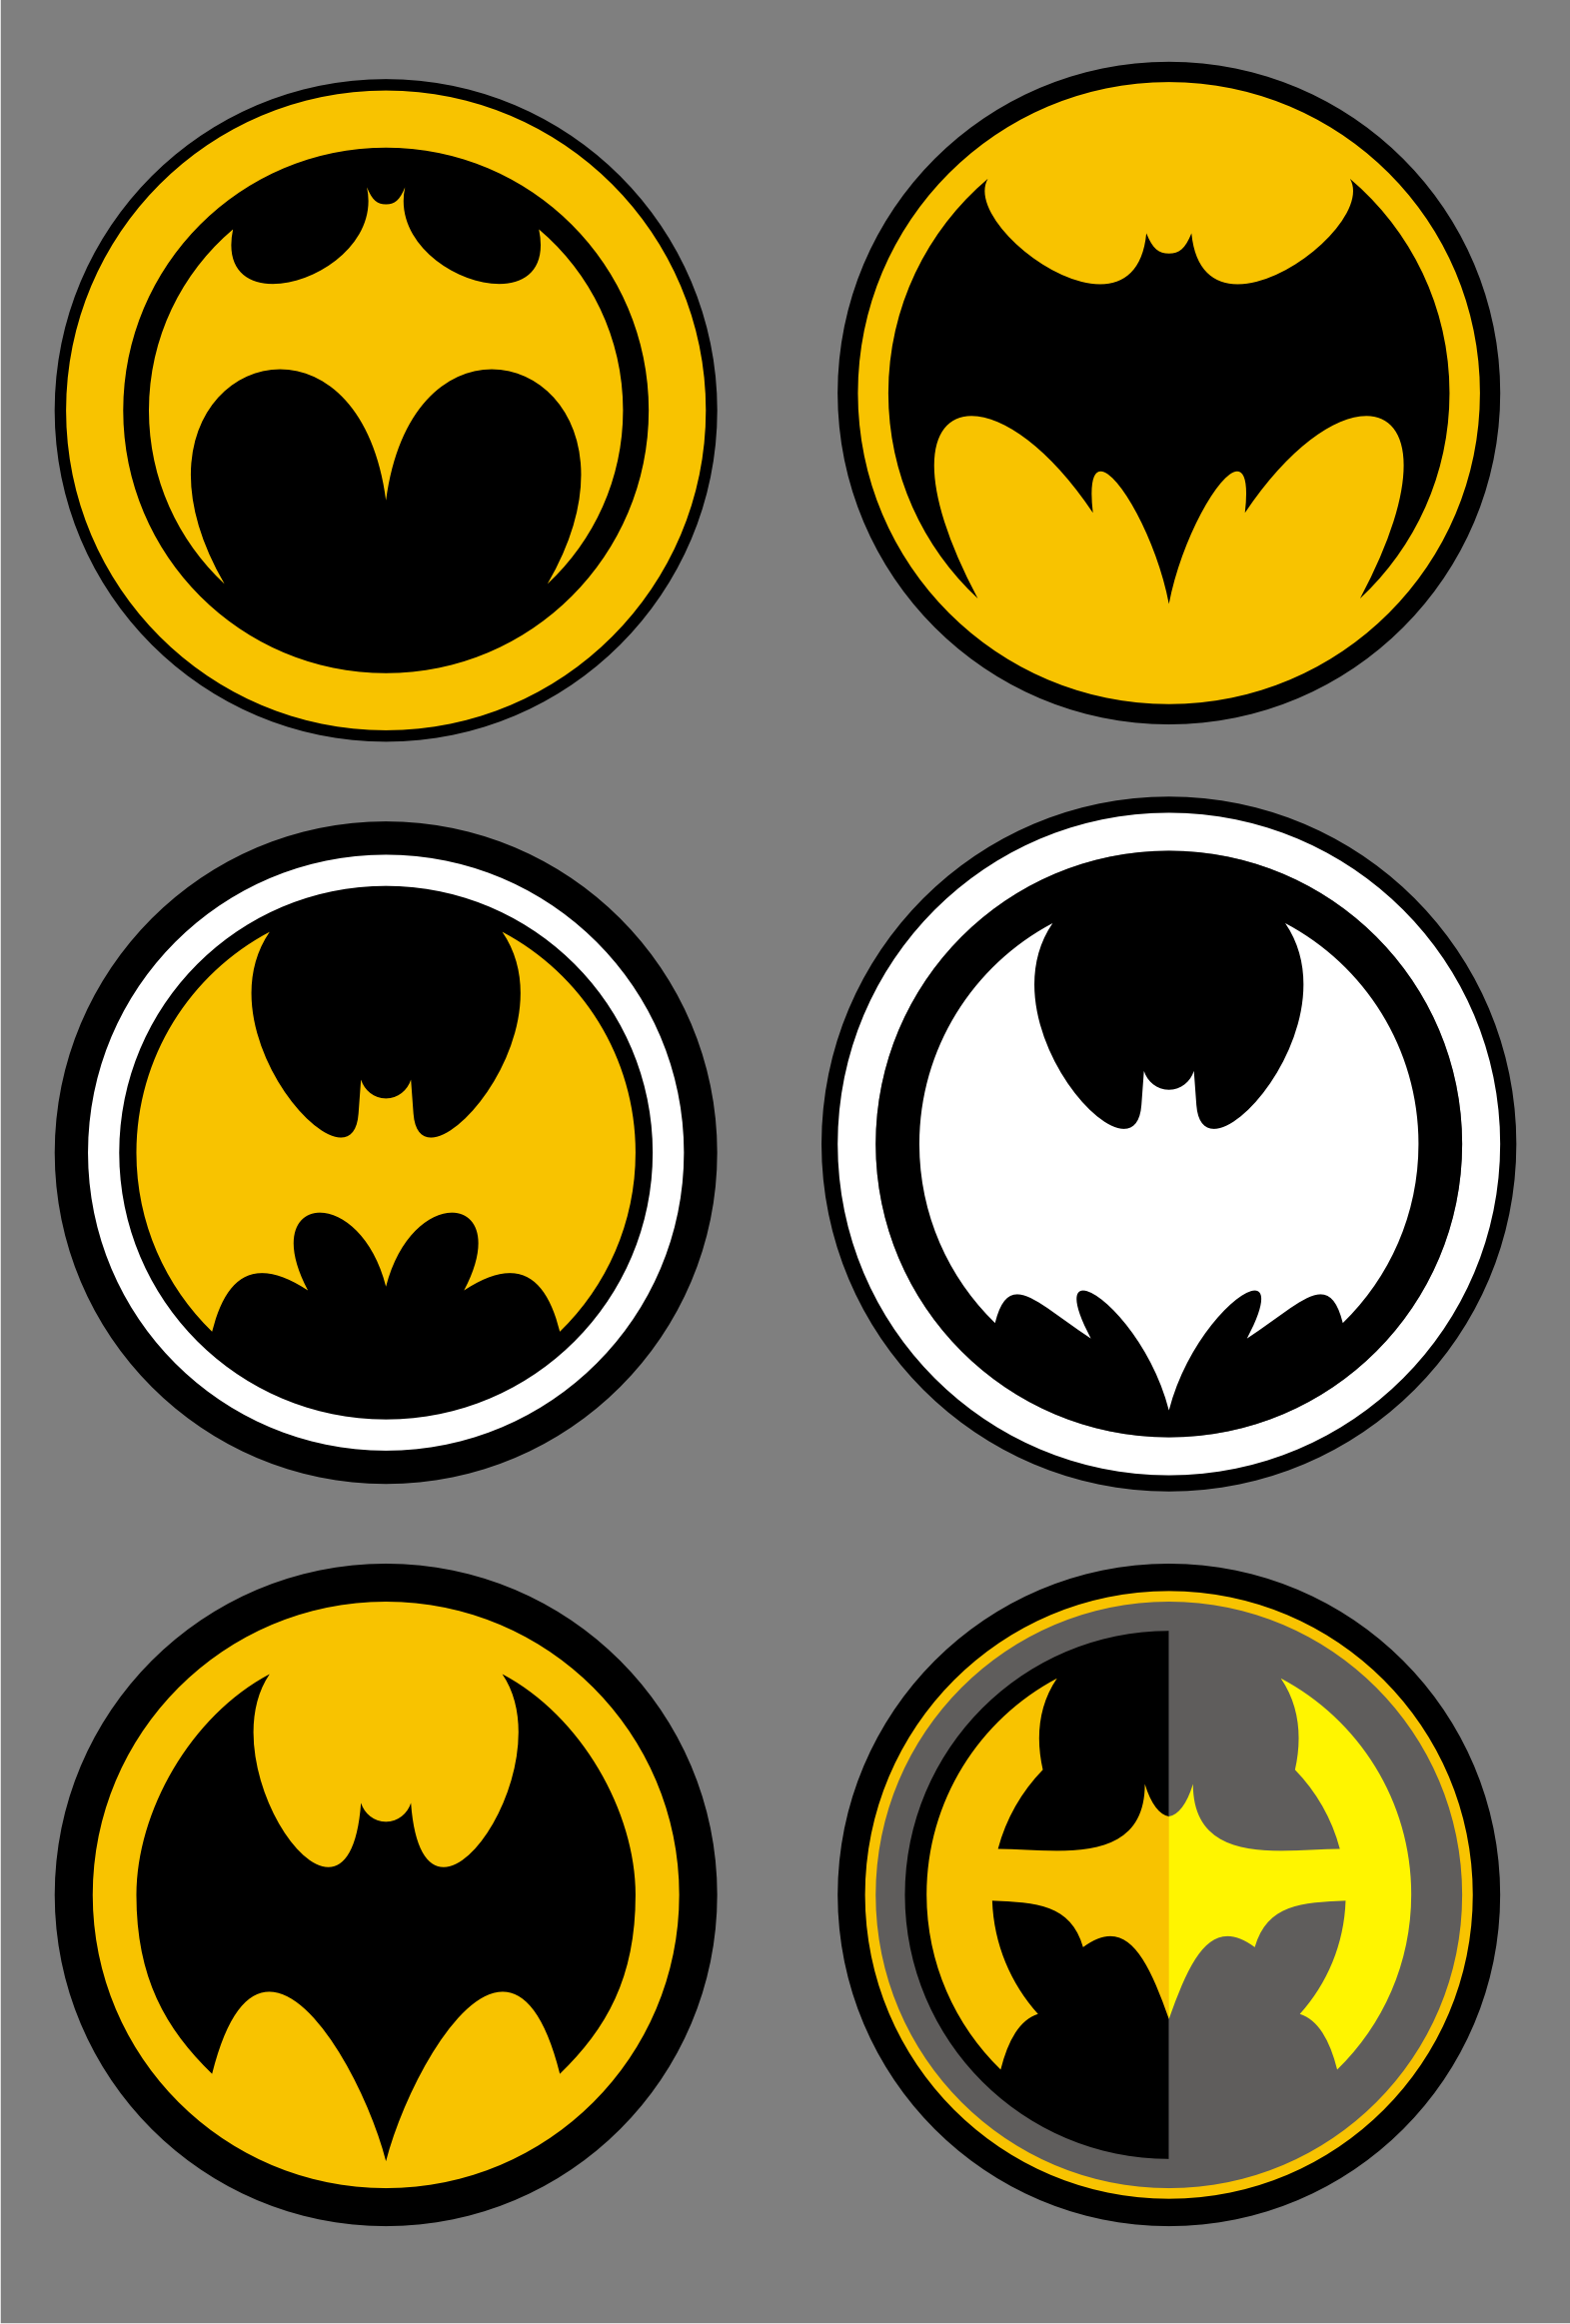 Batman Logo Png - ClipArt Best